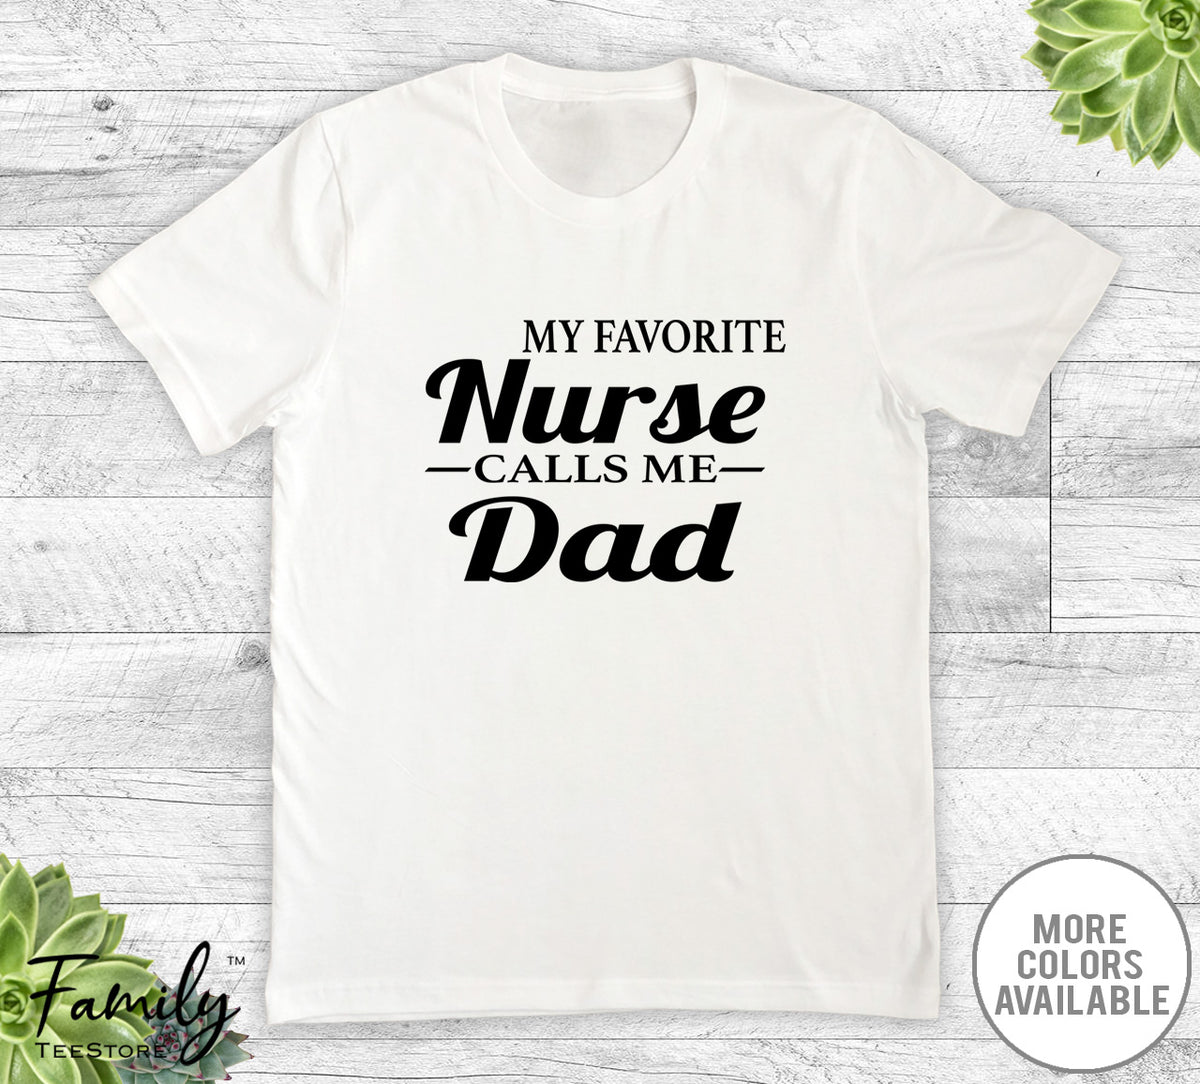 My Favorite Nurse Calls Me Dad - Unisex T-shirt - Nurse's Dad Shirt - Nurse's Dad Gift